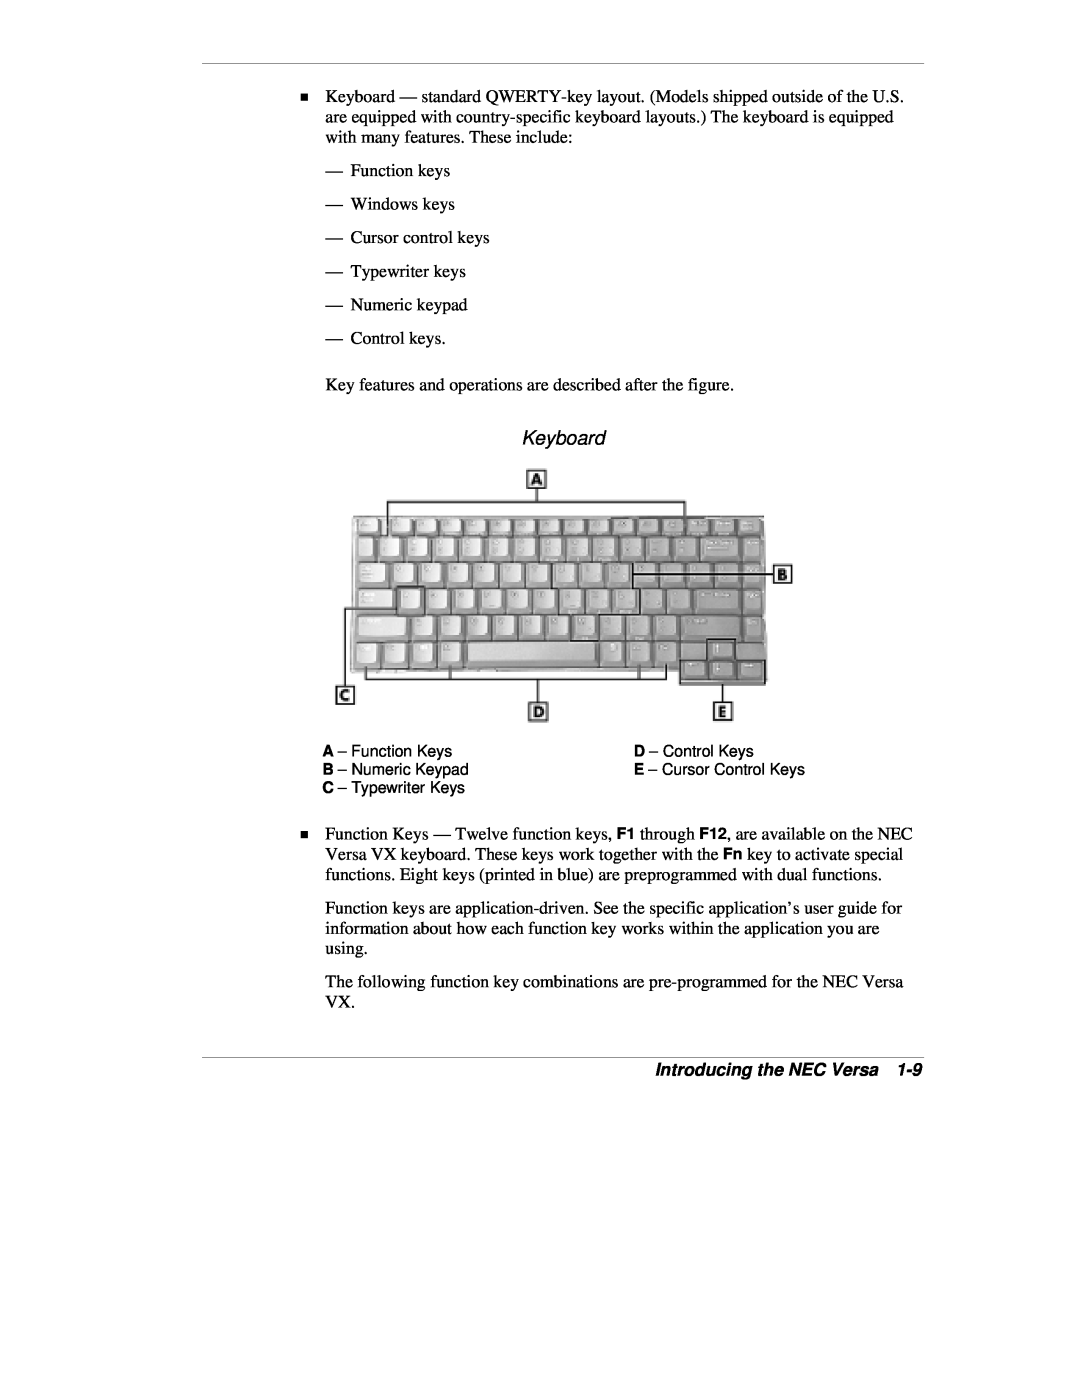 NEC VX manual Keyboard, Introducing the NEC Versa 